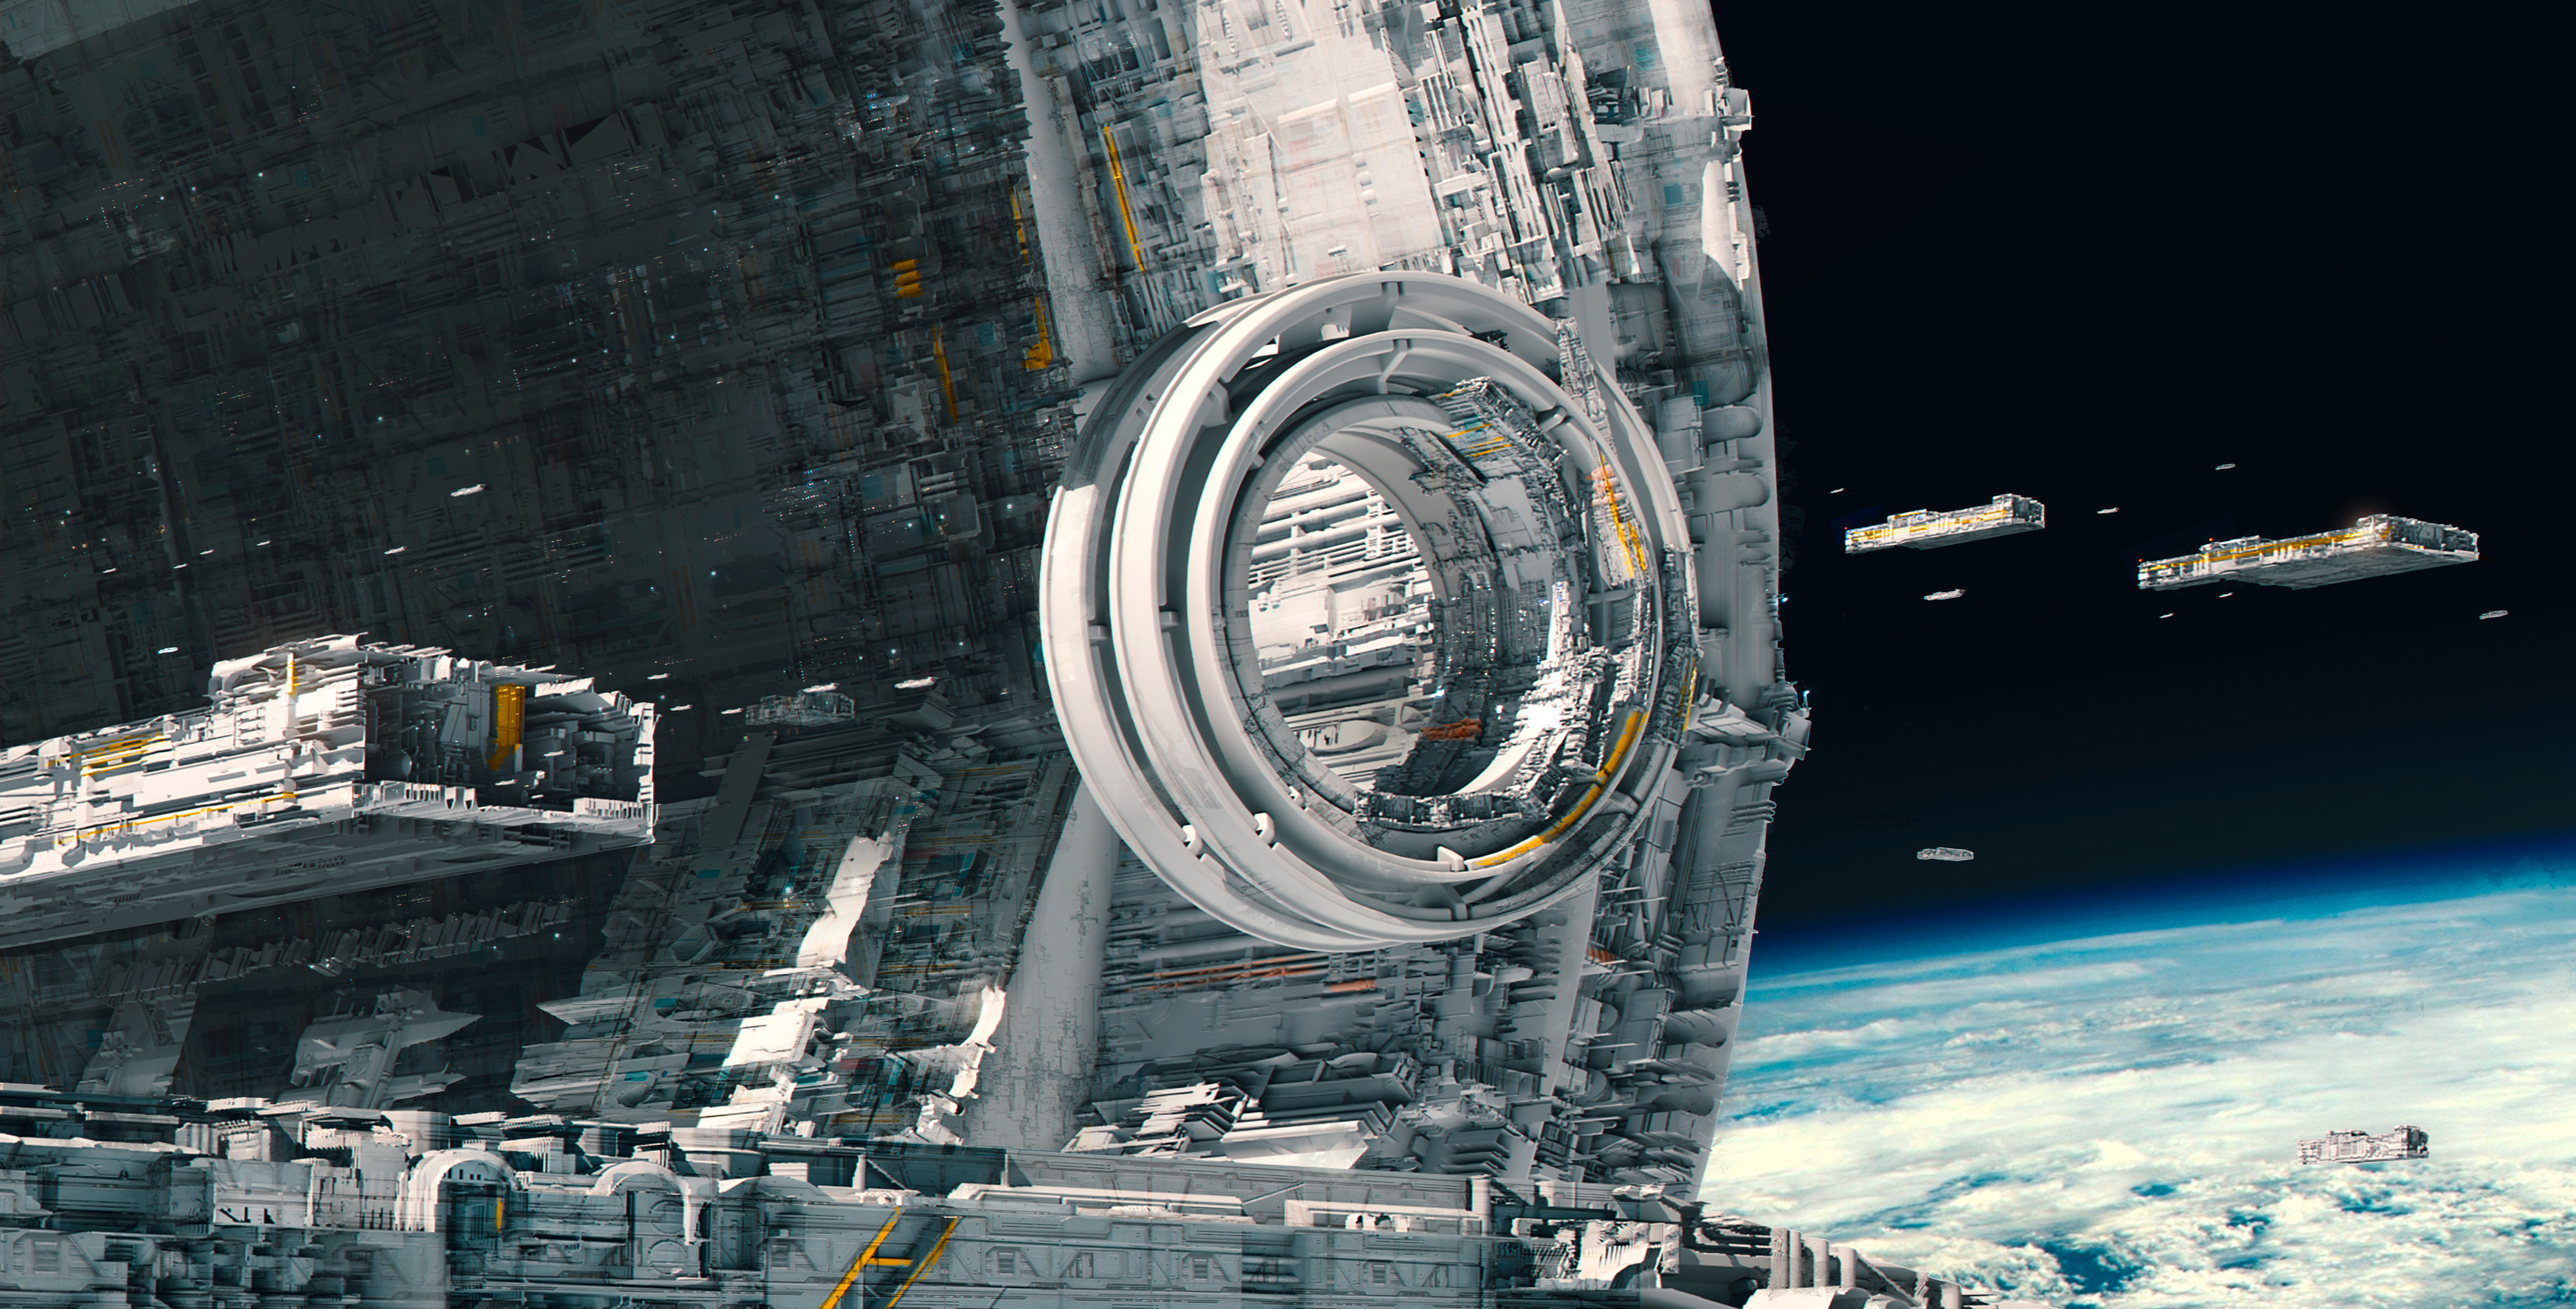 General 3840x1952 digital art artwork space space station futuristic technology architecture spaceship ship